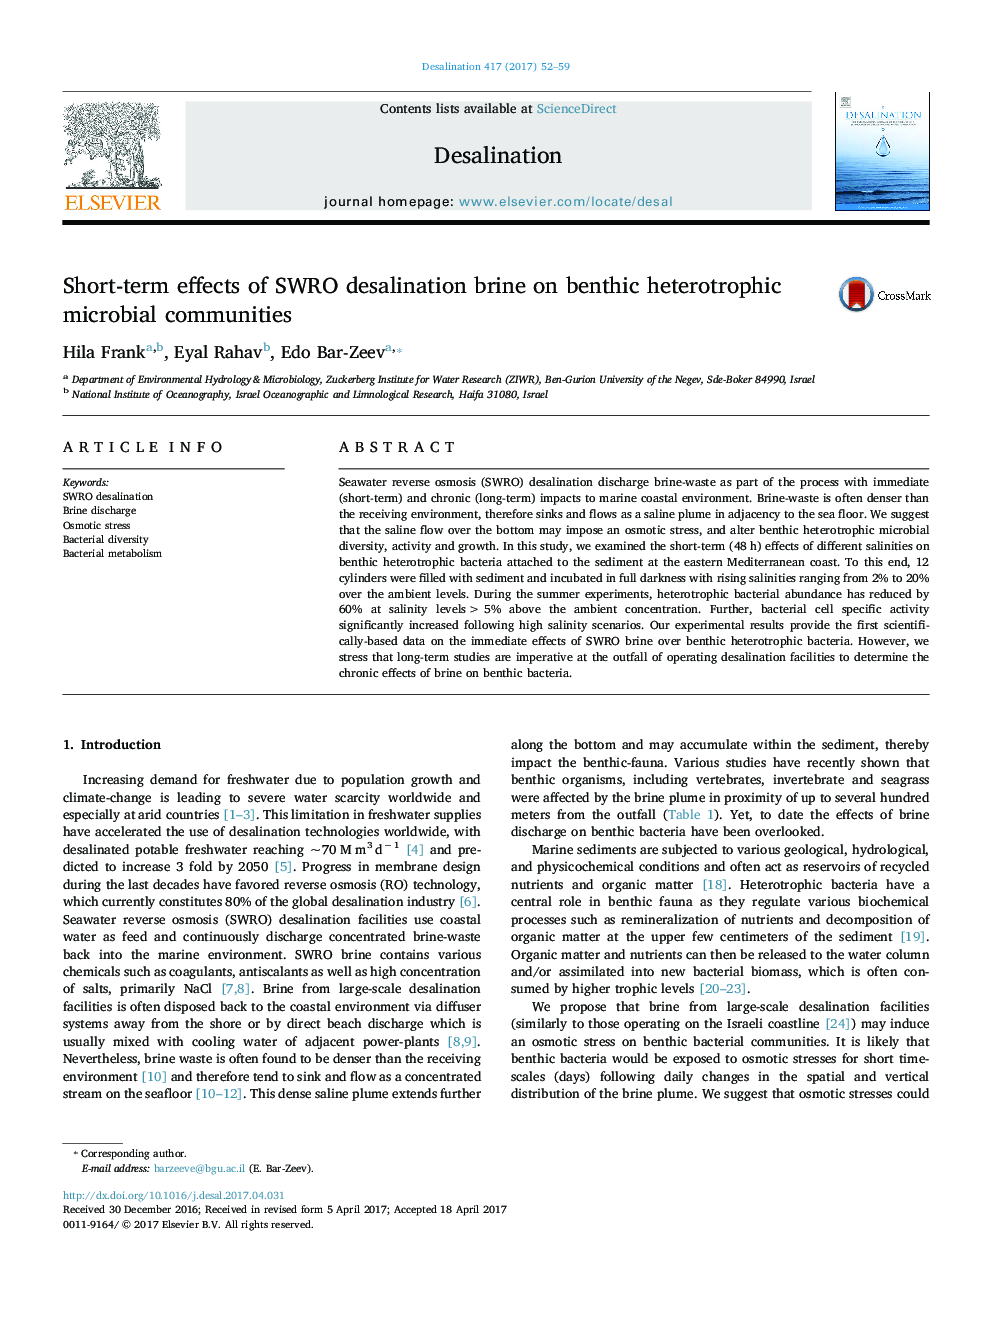 Short-term effects of SWRO desalination brine on benthic heterotrophic microbial communities